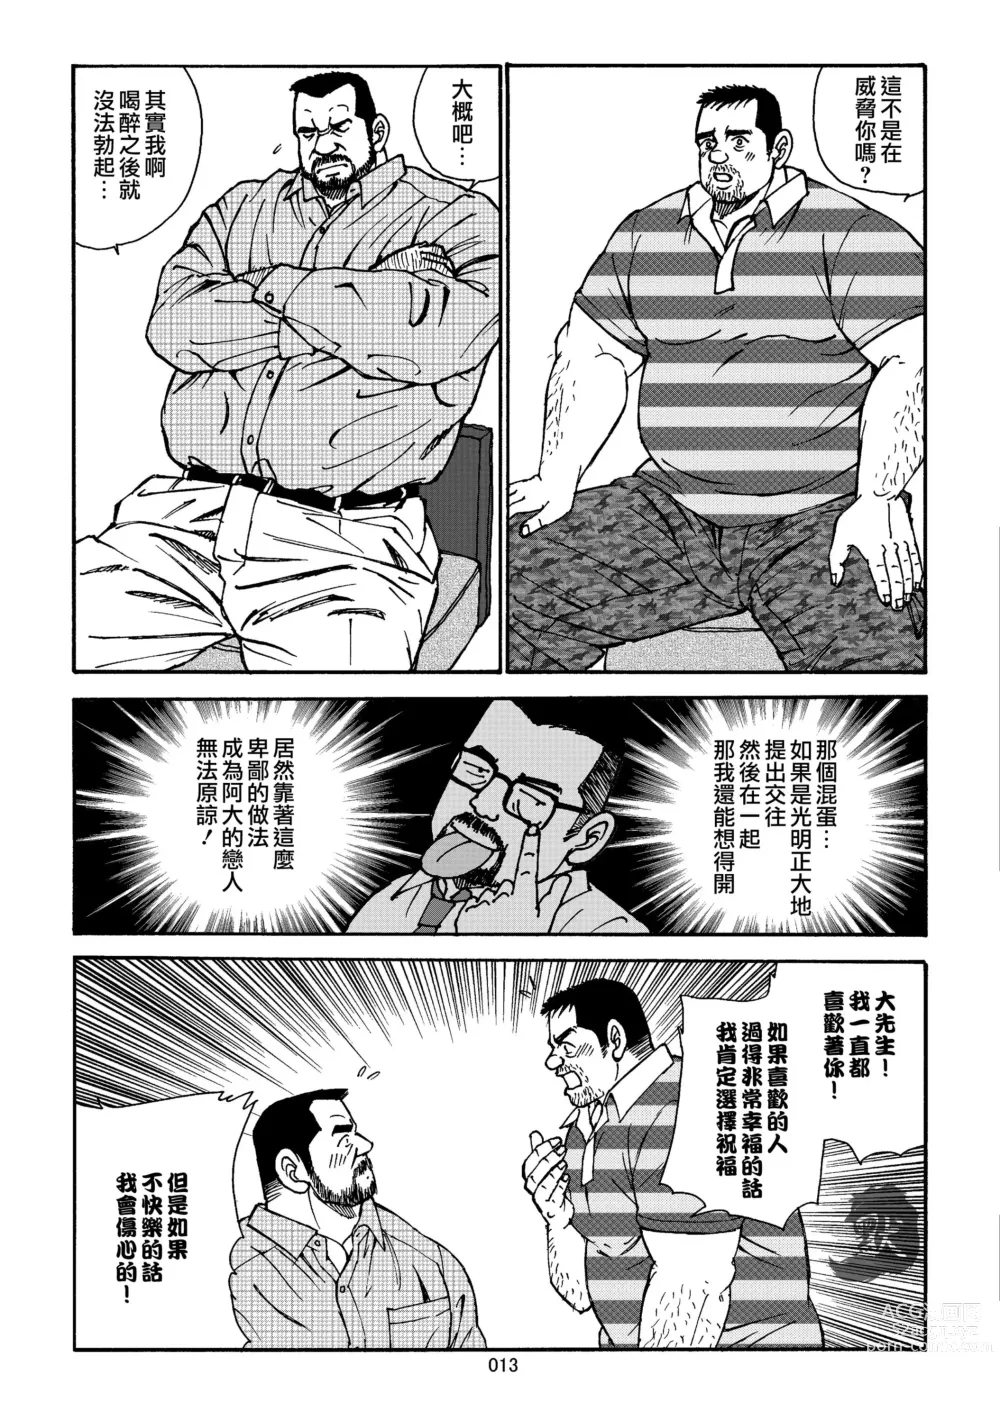 Page 13 of manga おいしい性活